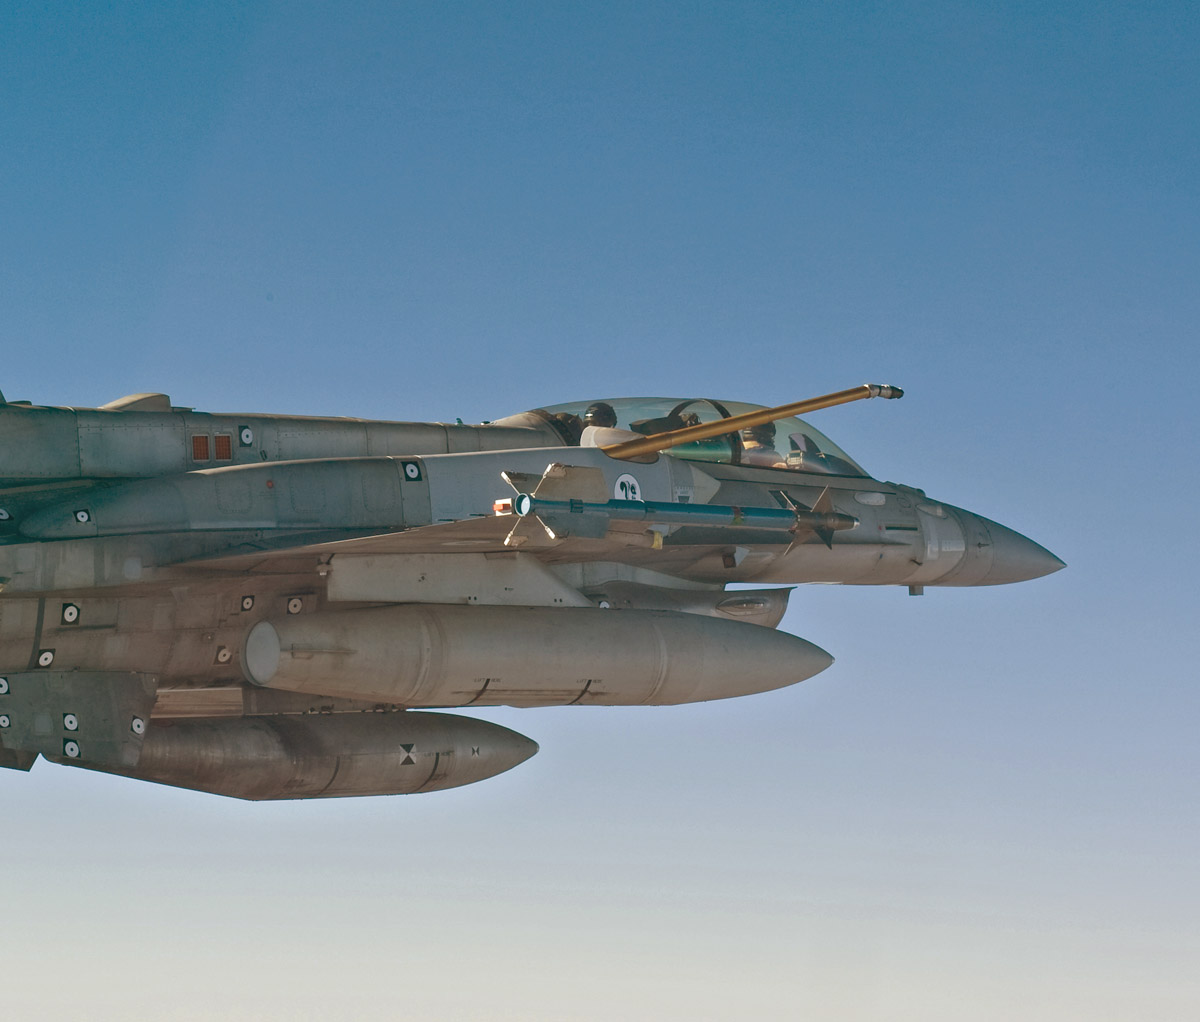 ممكن مقارنة بسيطة؟ Images+from+drogue-probe+style+air+refueling+system+testing+on+F-16.